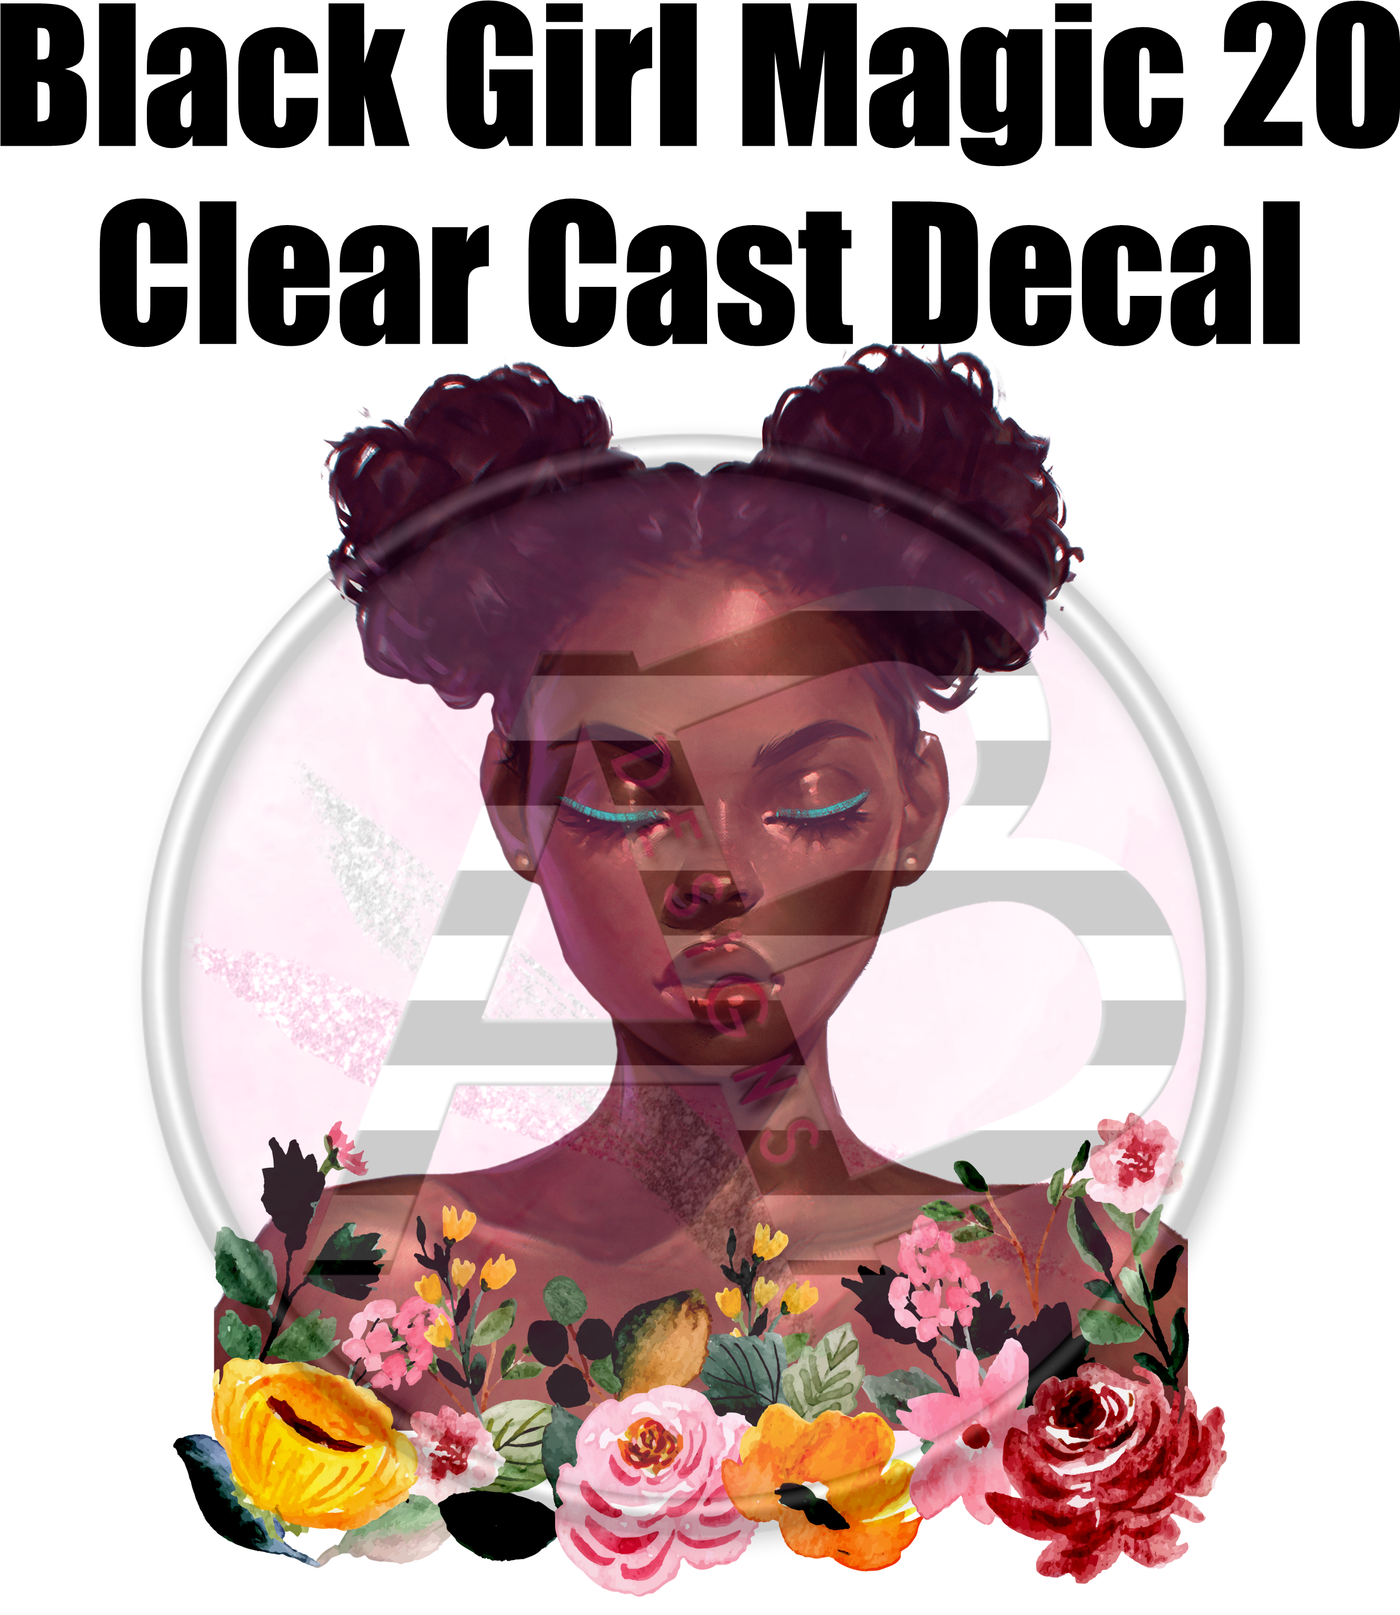 Black Girl Magic 20 - Clear Cast Decal